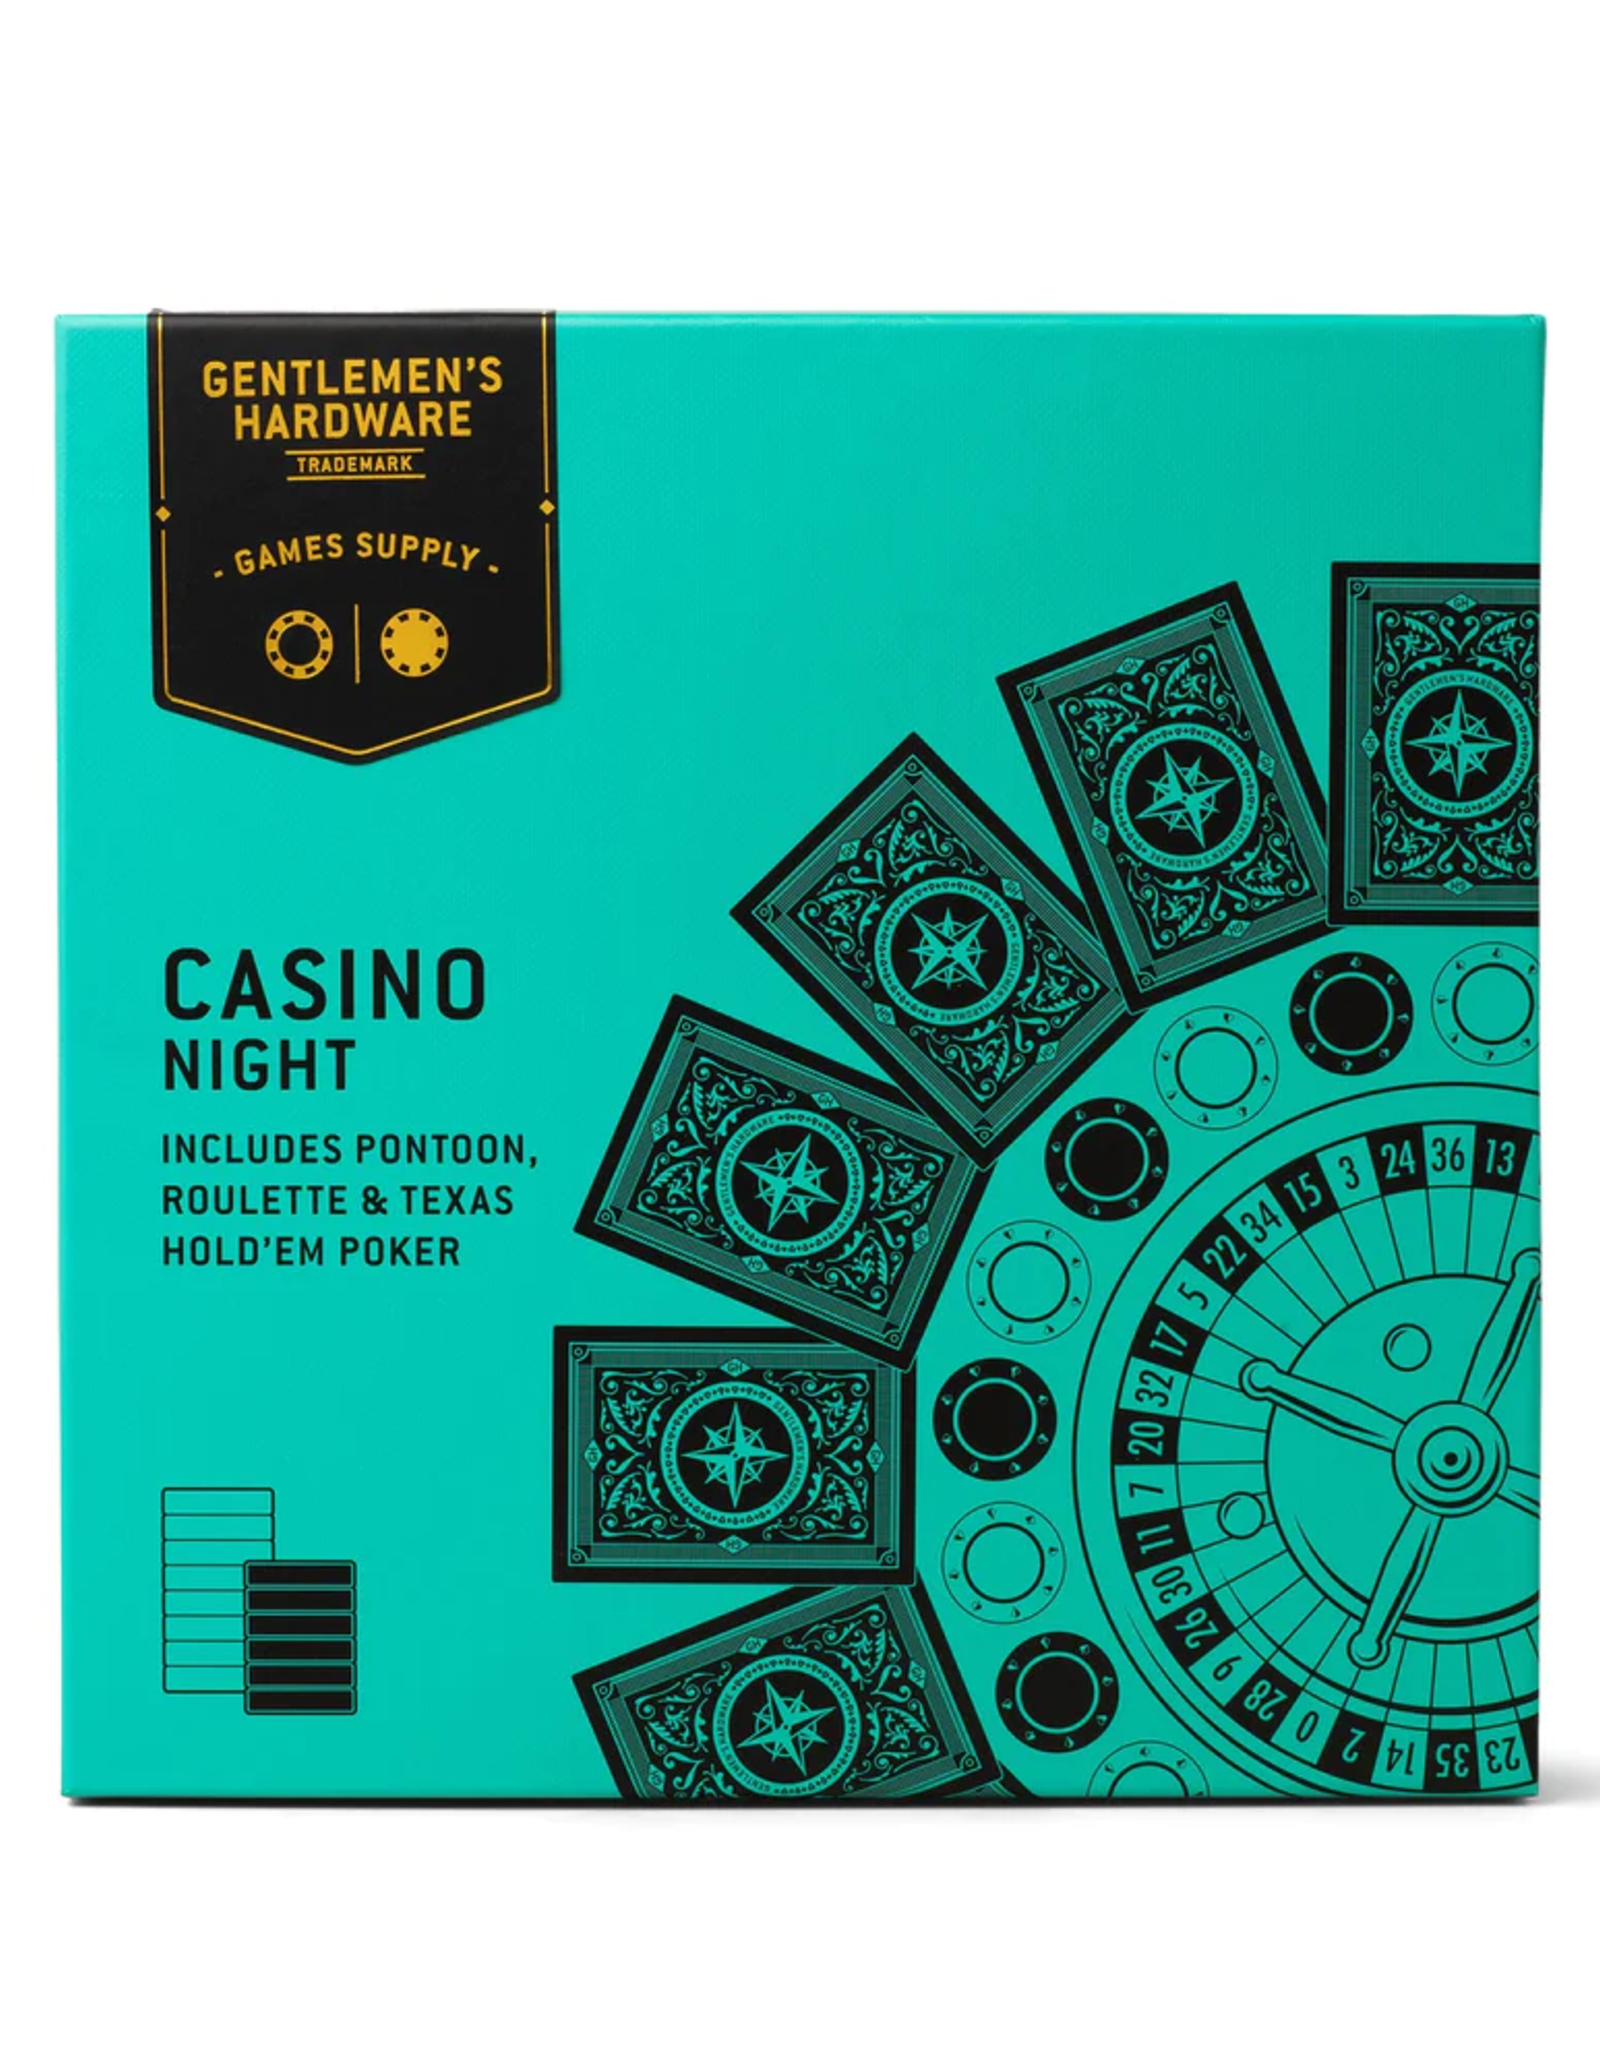 Gentlemens's Hardware Casino Night - Gentlemen's Hardware